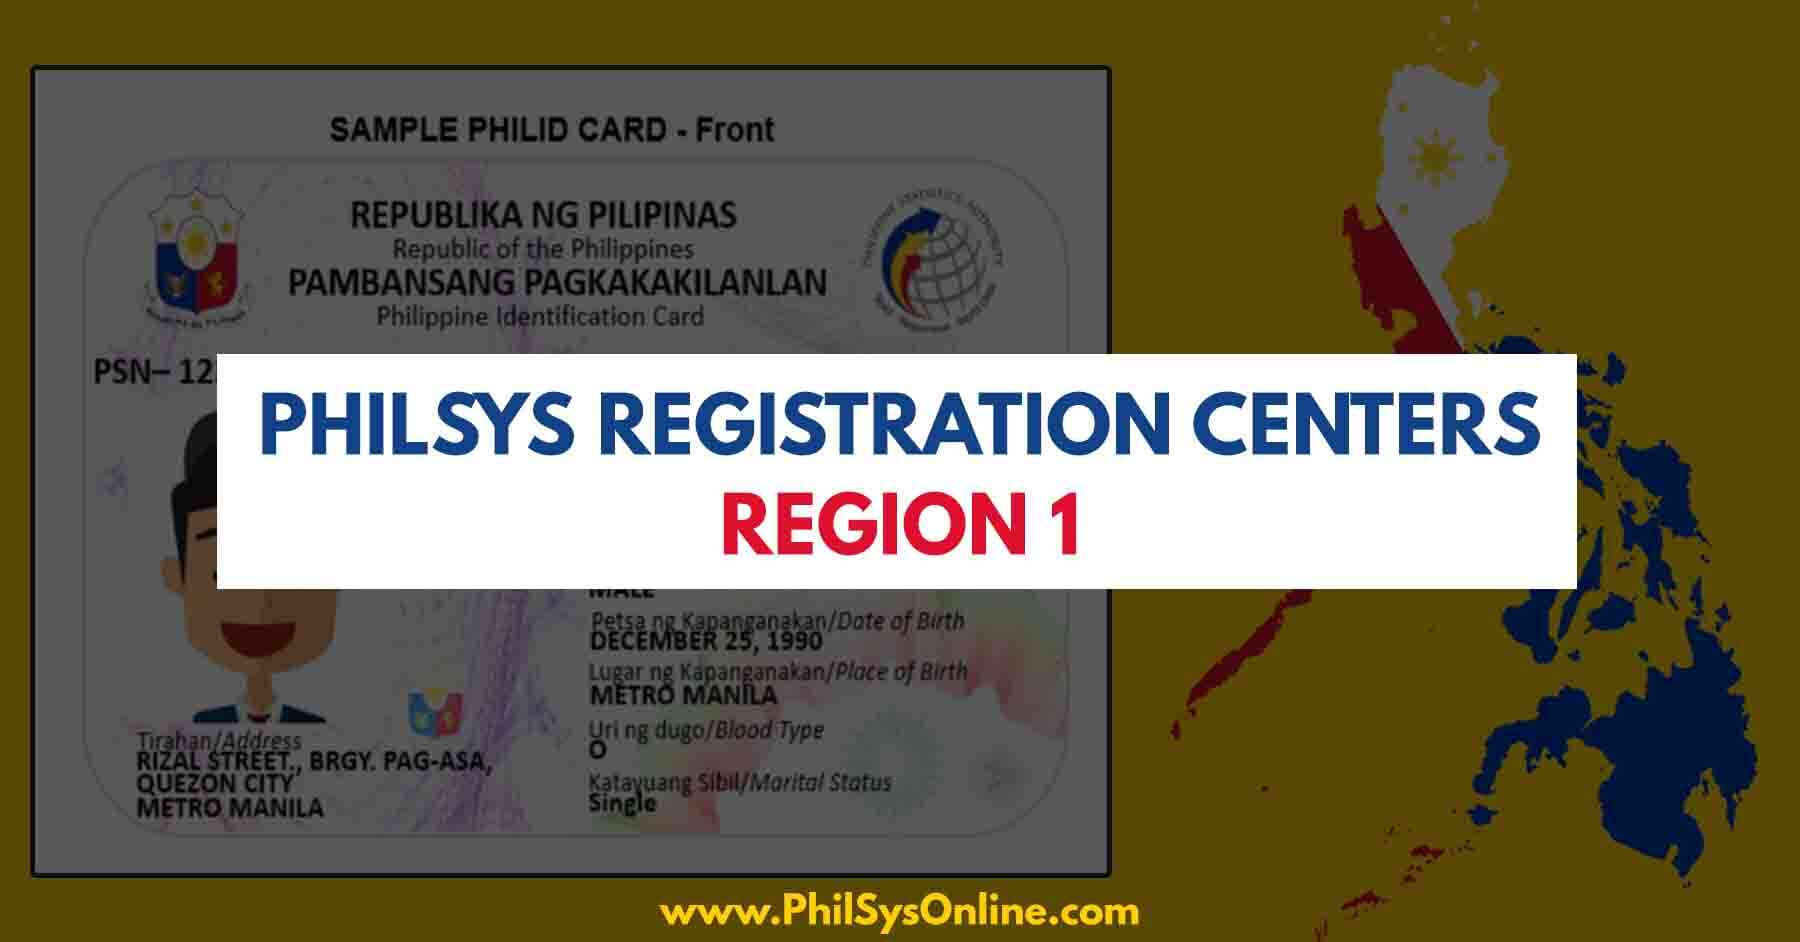 philsys registration centers region 1 philippines